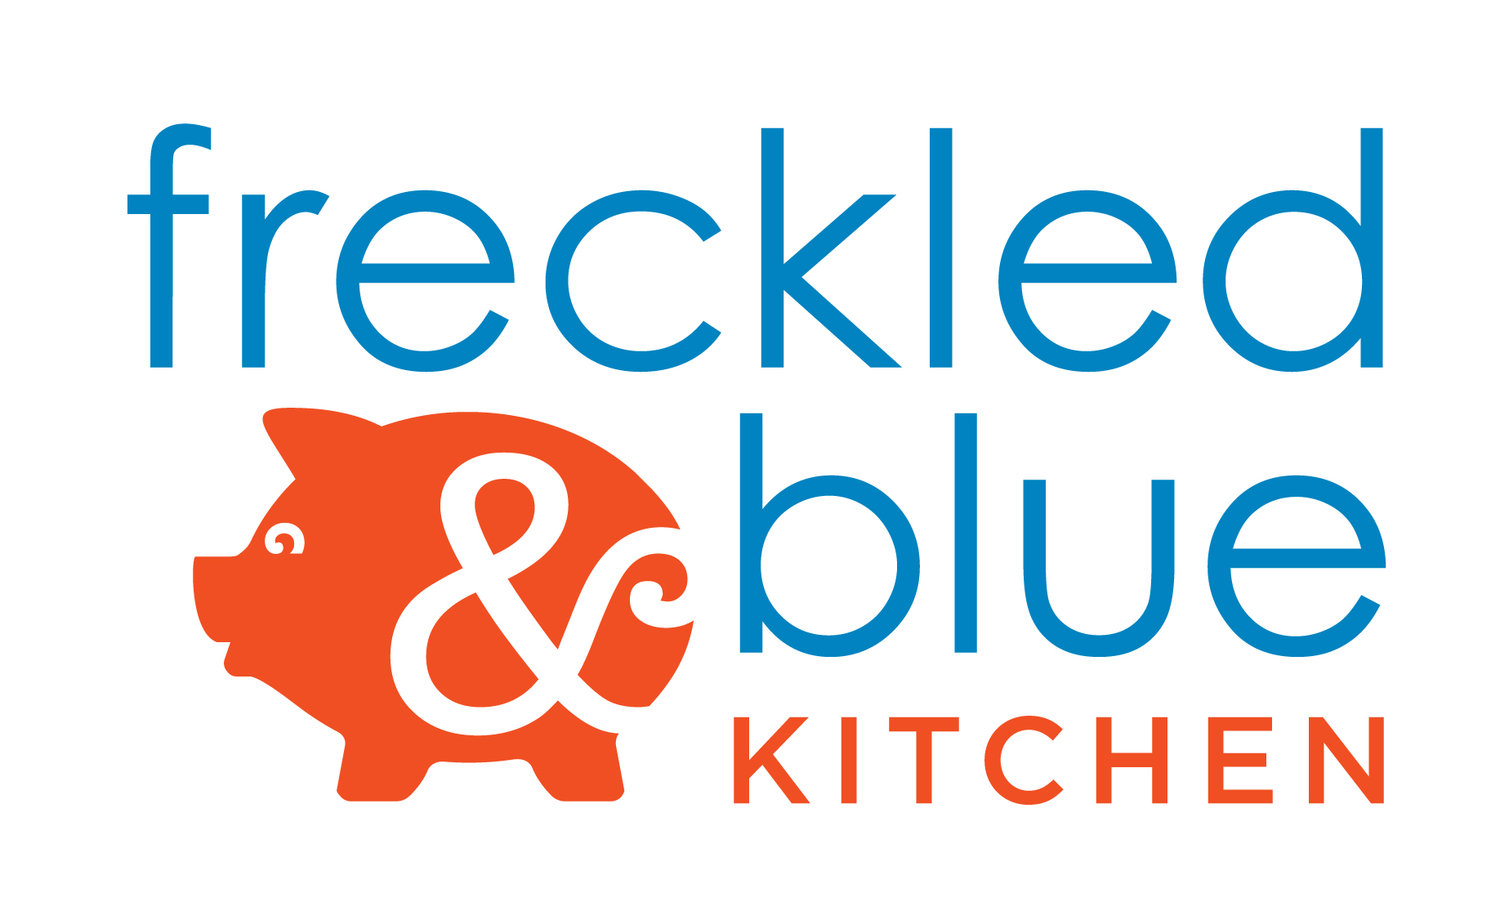 Freckled & Blue Kitchen